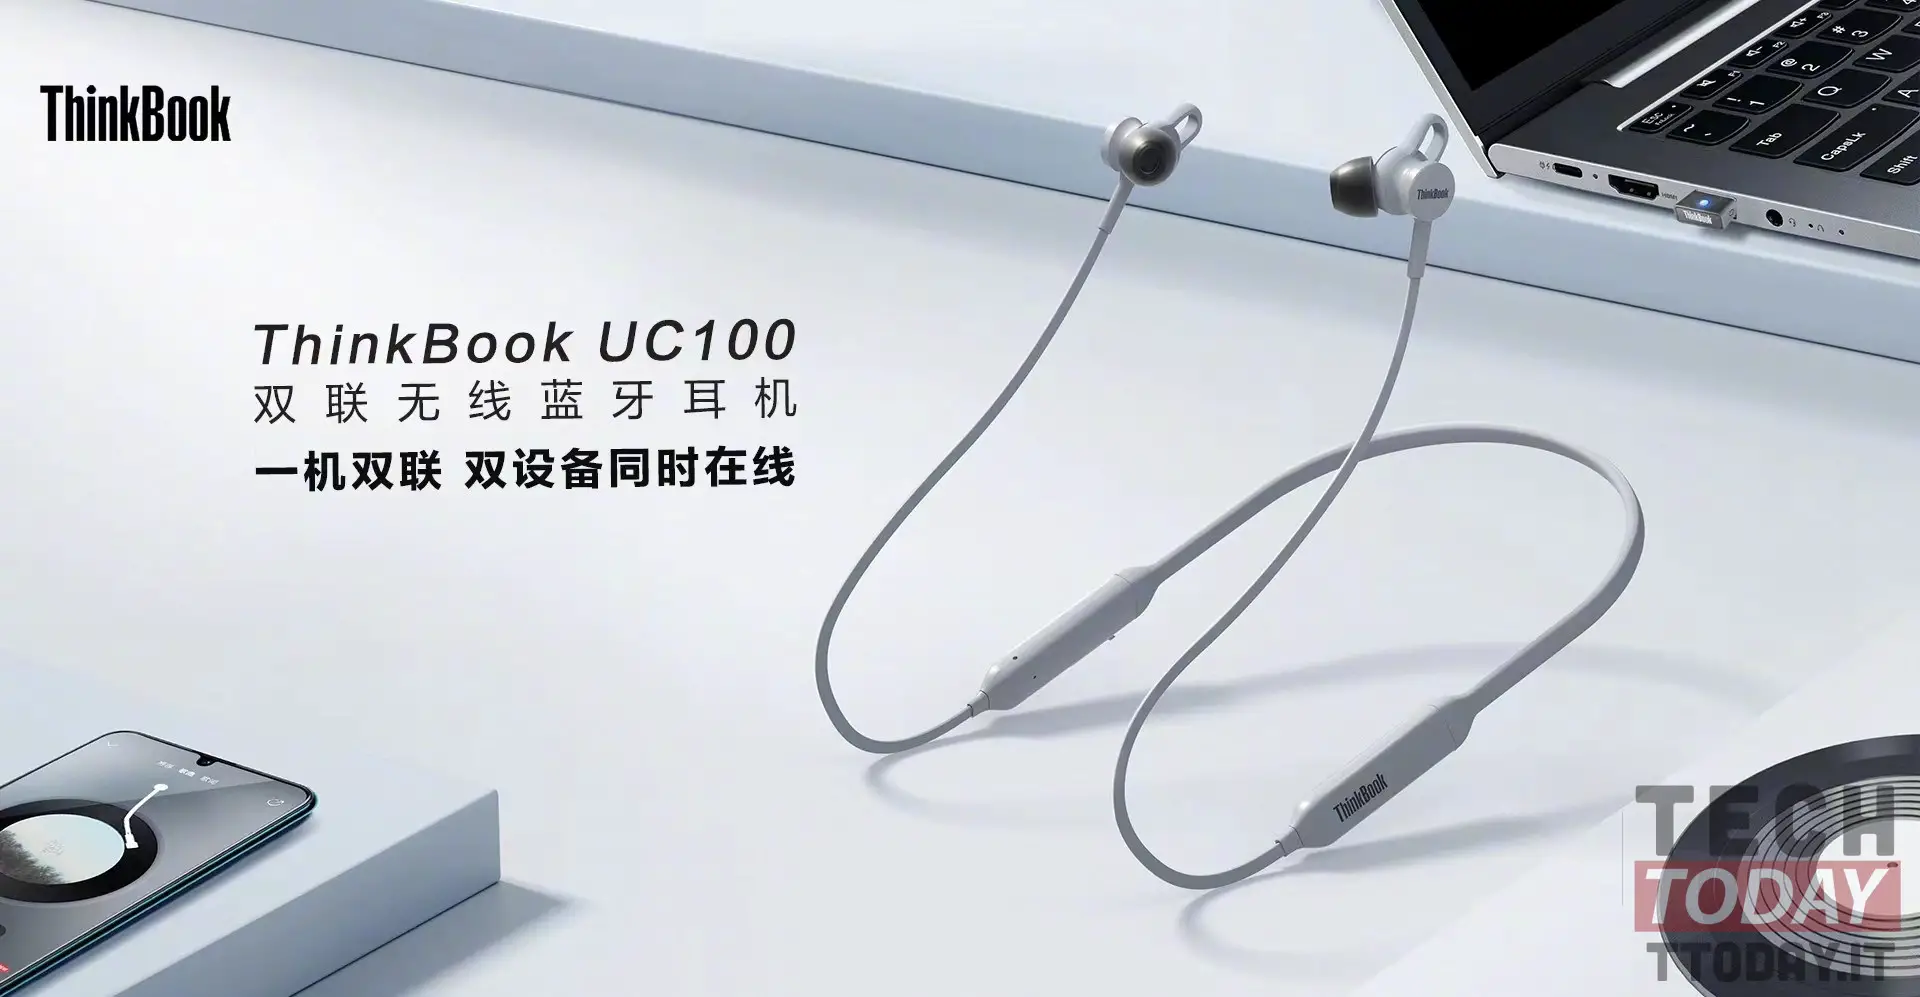 Lenovo ThinkBook UC100